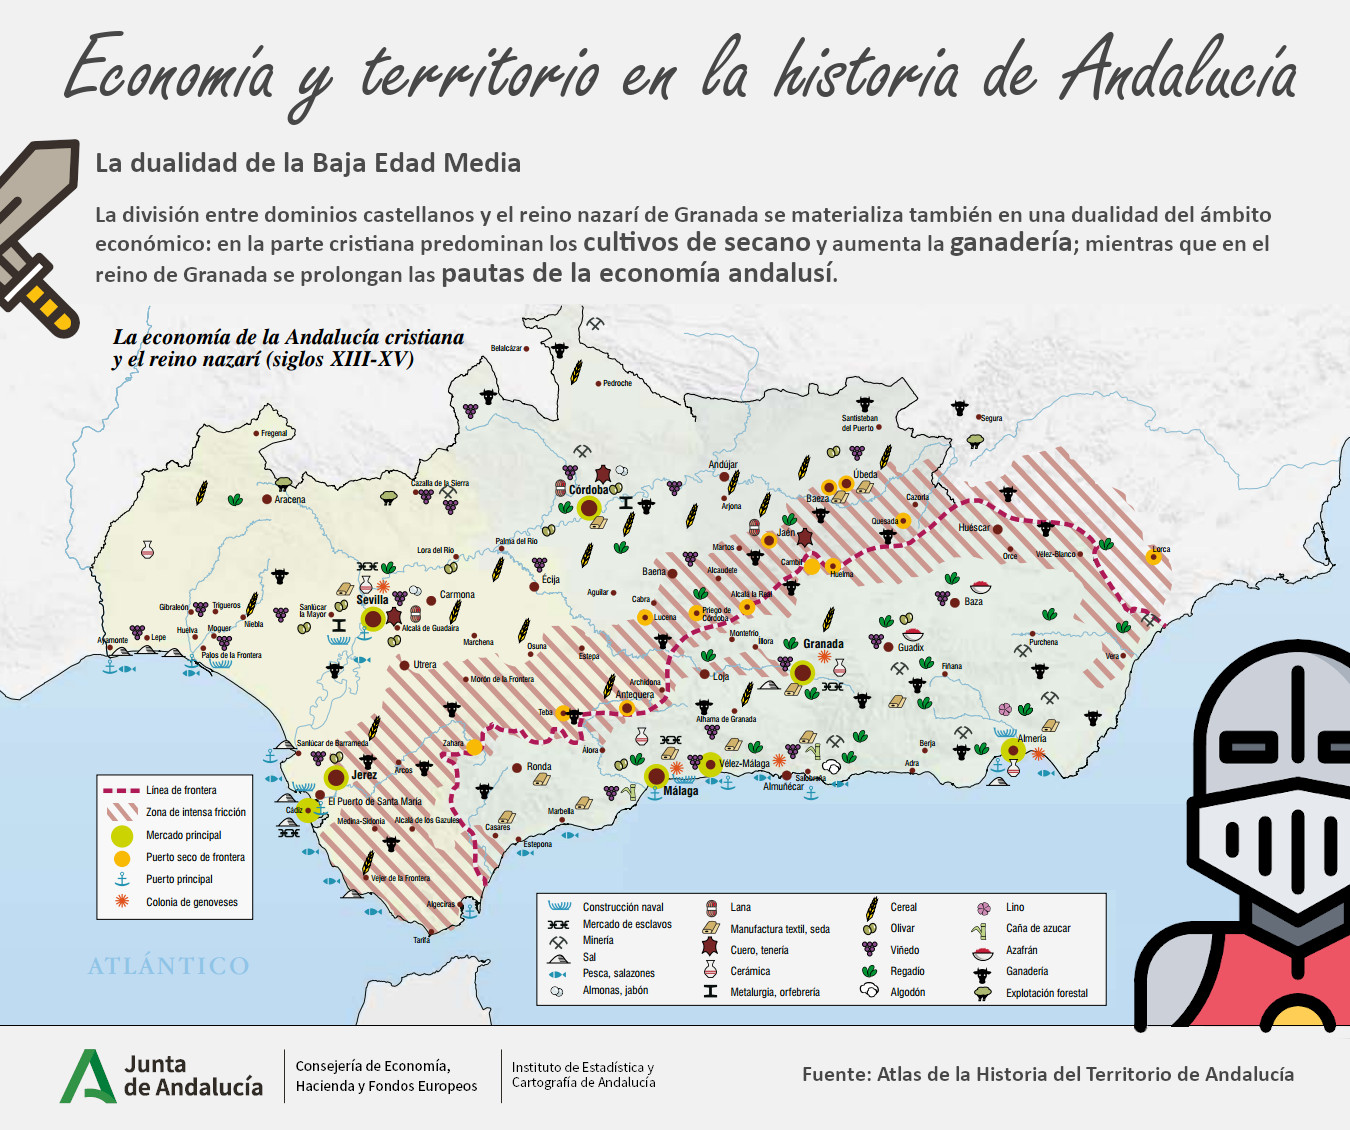 Economa y territorio en la historia de Andaluca. Baja Edad Media. Dibujo creado por Freepik